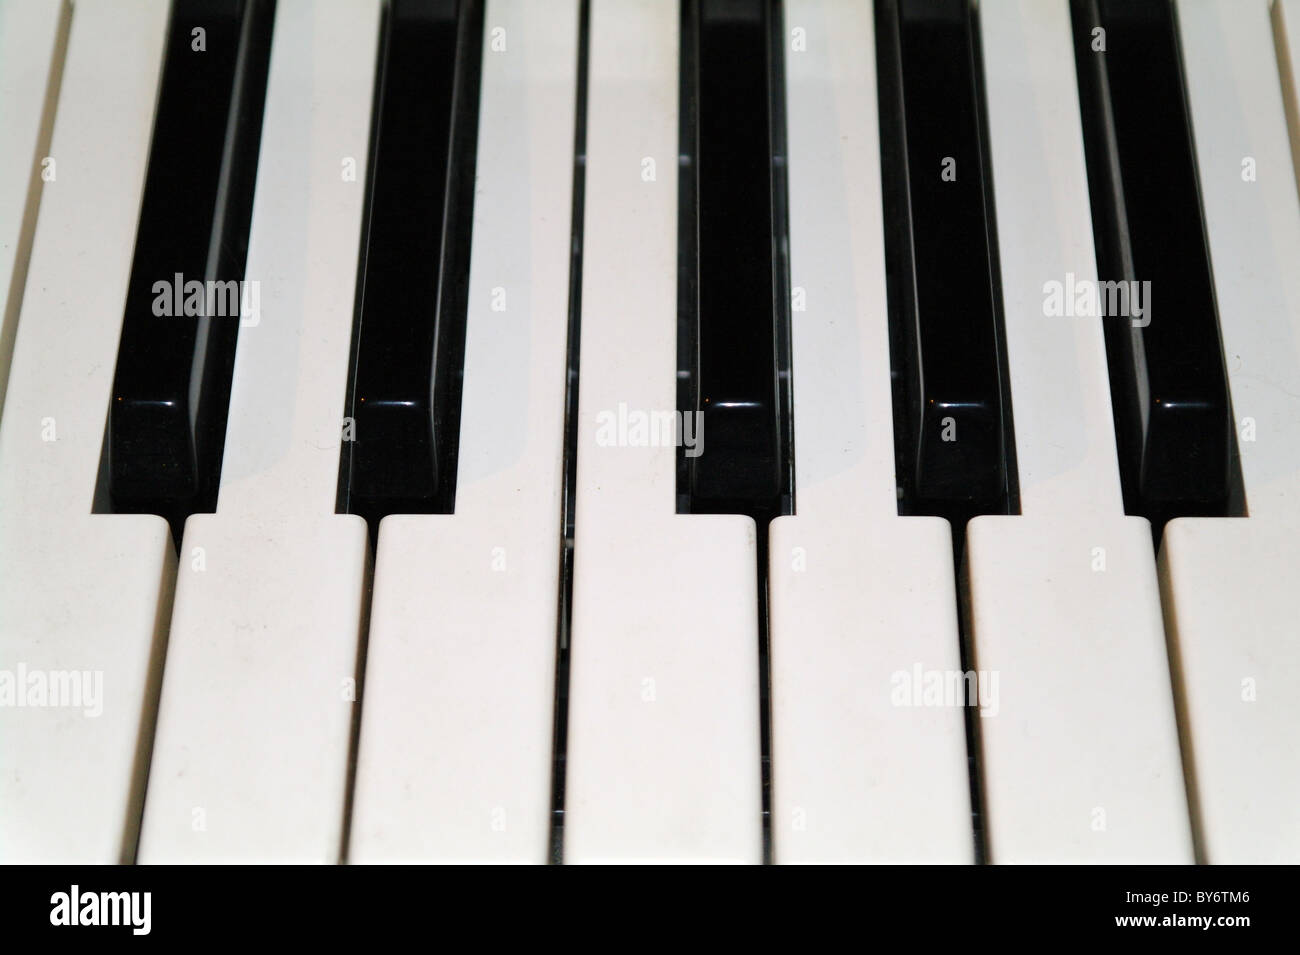 The keyboard synthesizer close up. Stock Photo